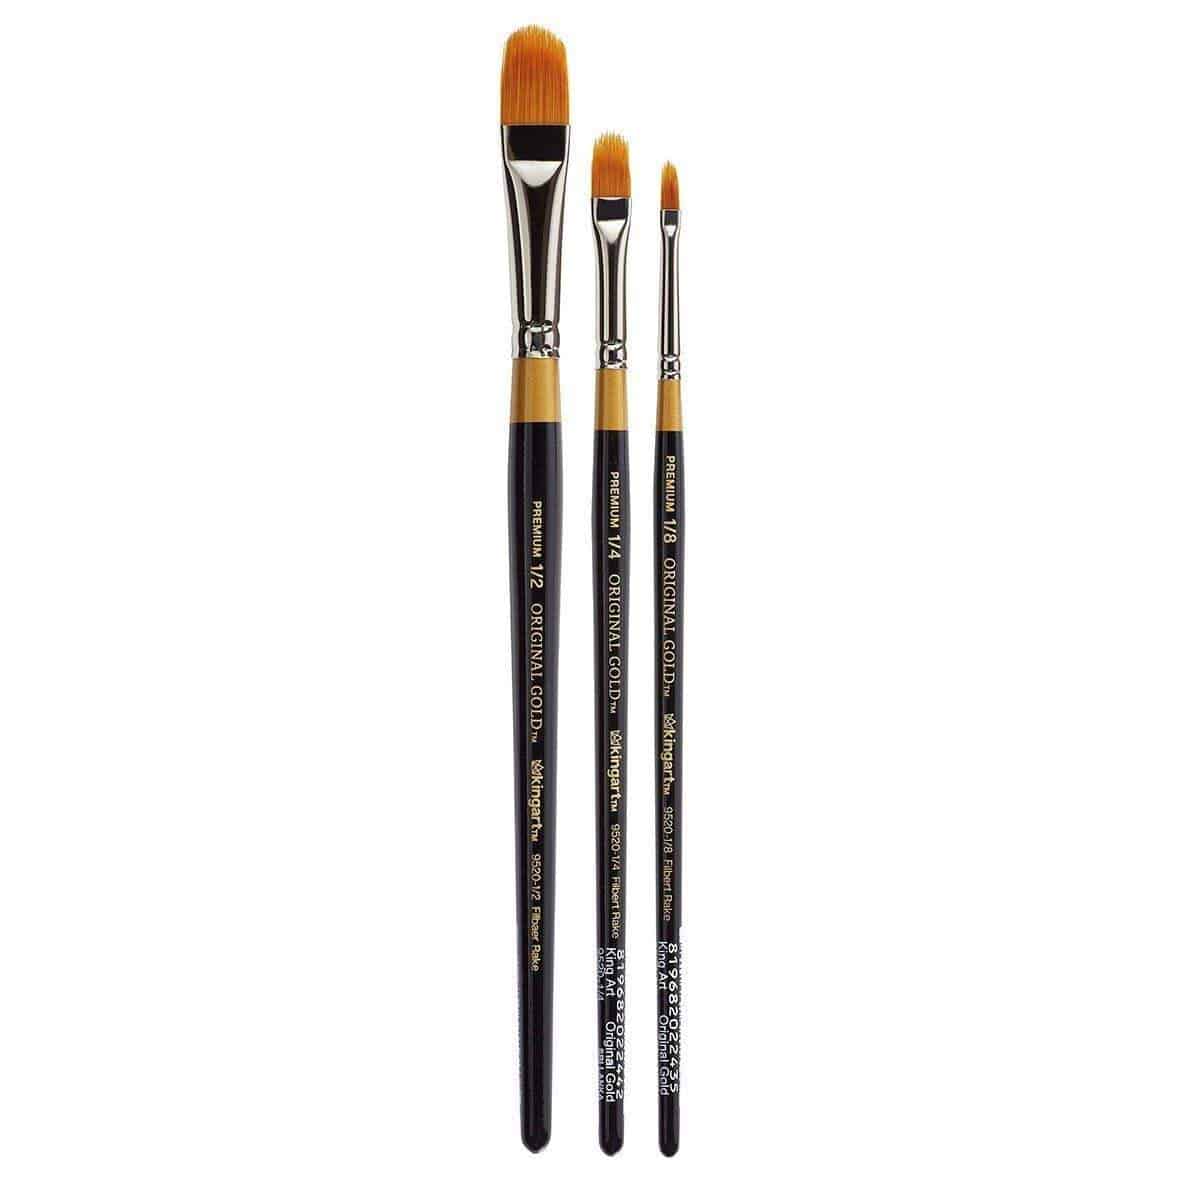 KINGART® Original Gold® 9275 Oval Mop Super Soft Dyed Black Natural Goat  Hair Series Premium Multimedia Artist Brushes, Set of 4